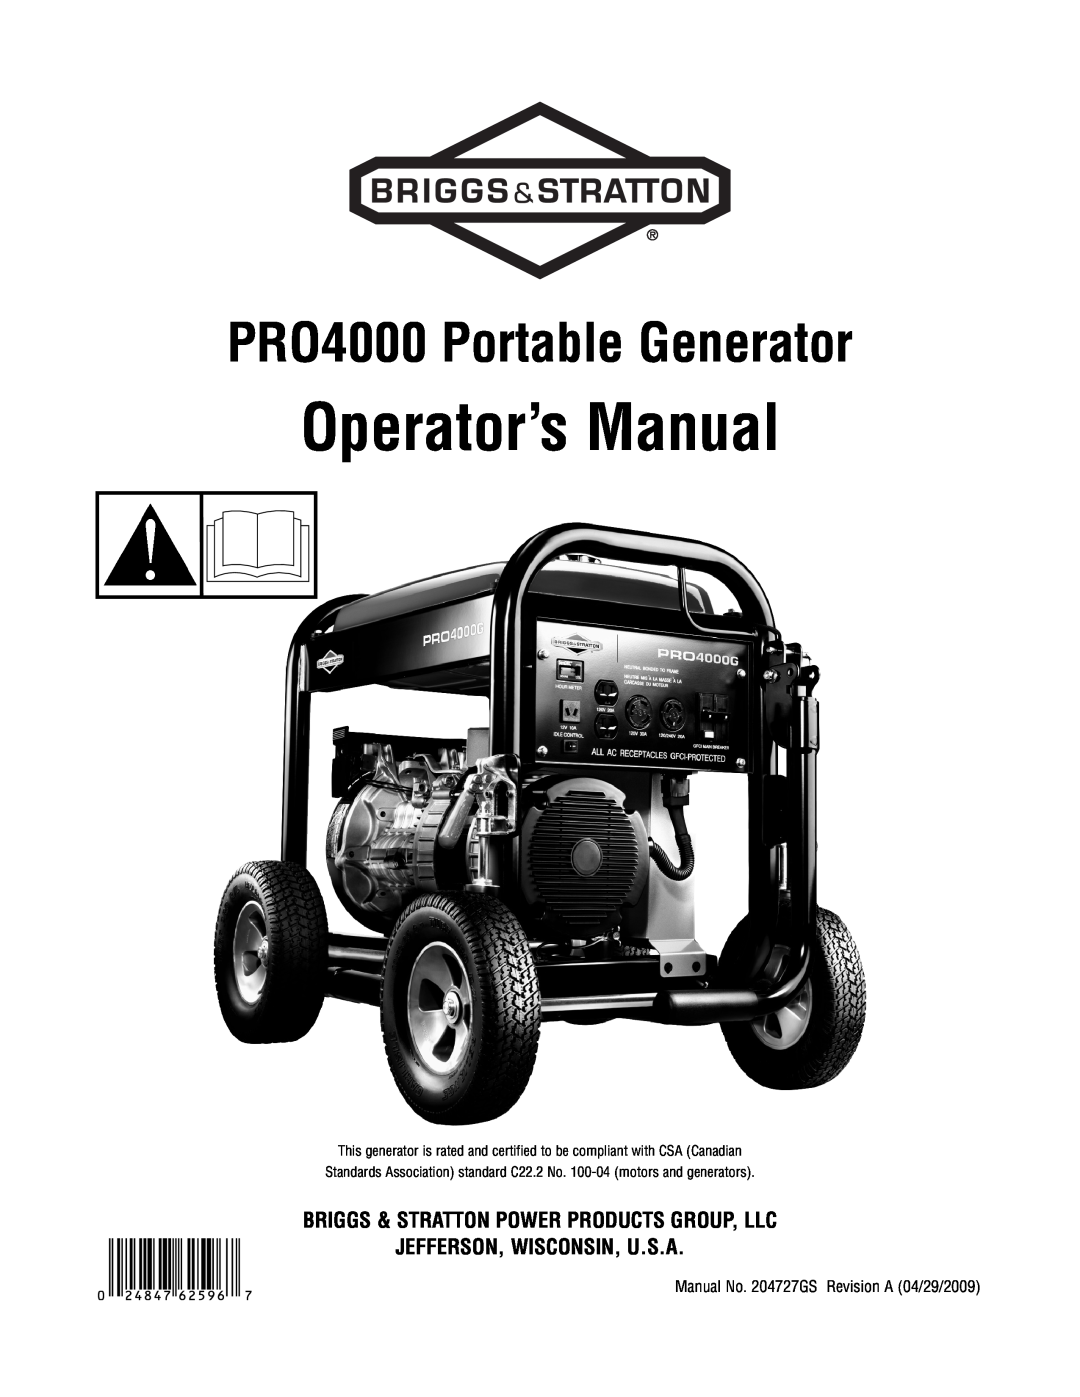 Briggs & Stratton manual Operator’s Manual, PRO4000 Portable Generator, Briggs & Stratton Power Products Group, Llc 